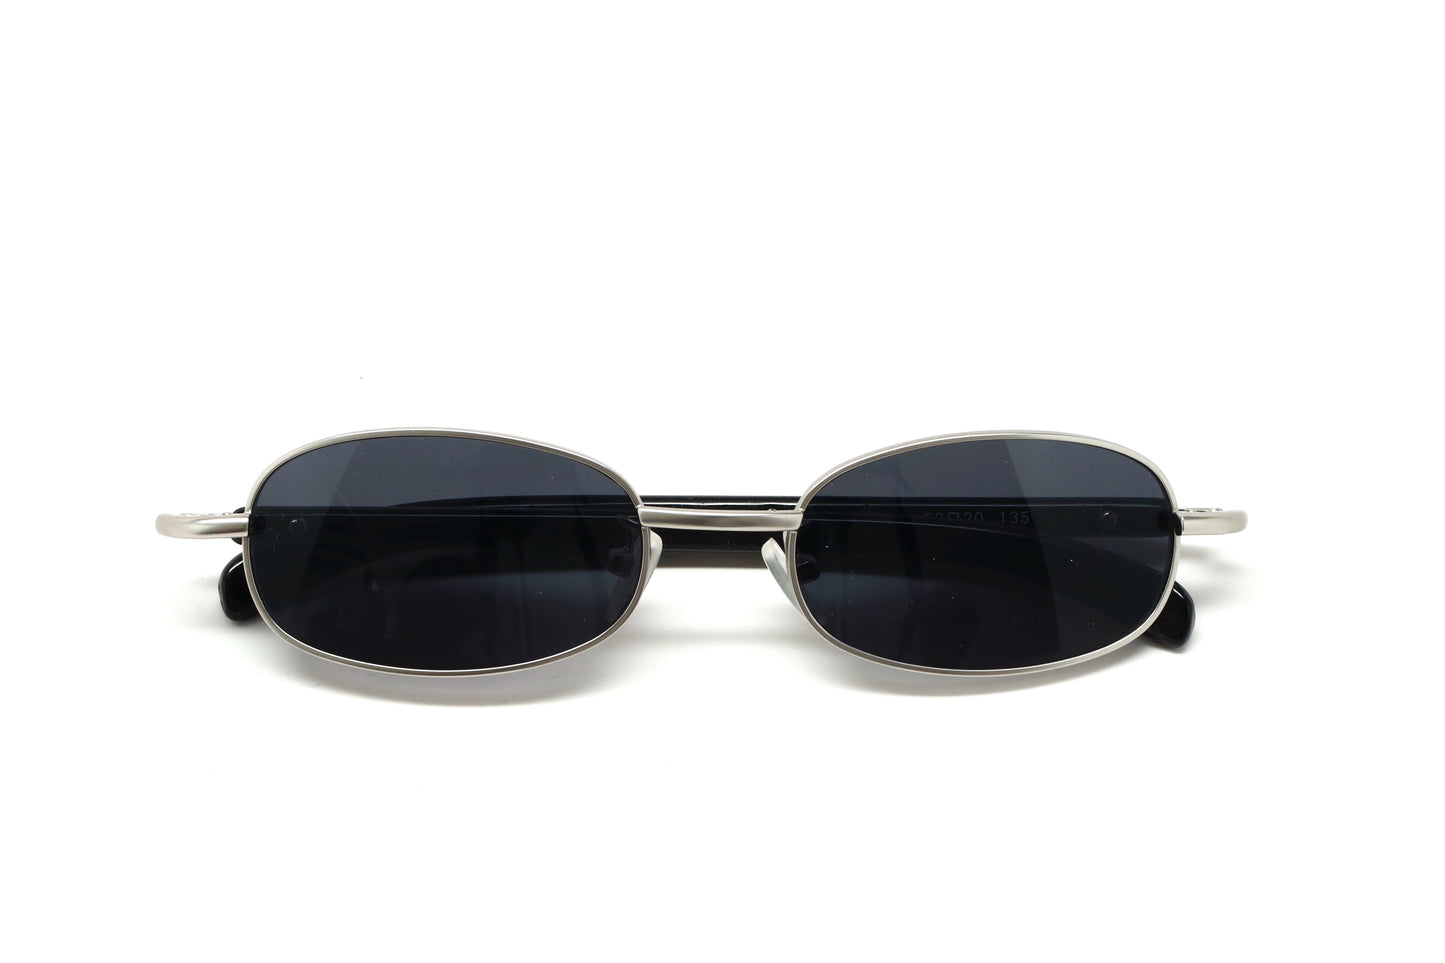 Vintage 90s Small Size Narrow Frame Wraparound  Sunglasses - Silver